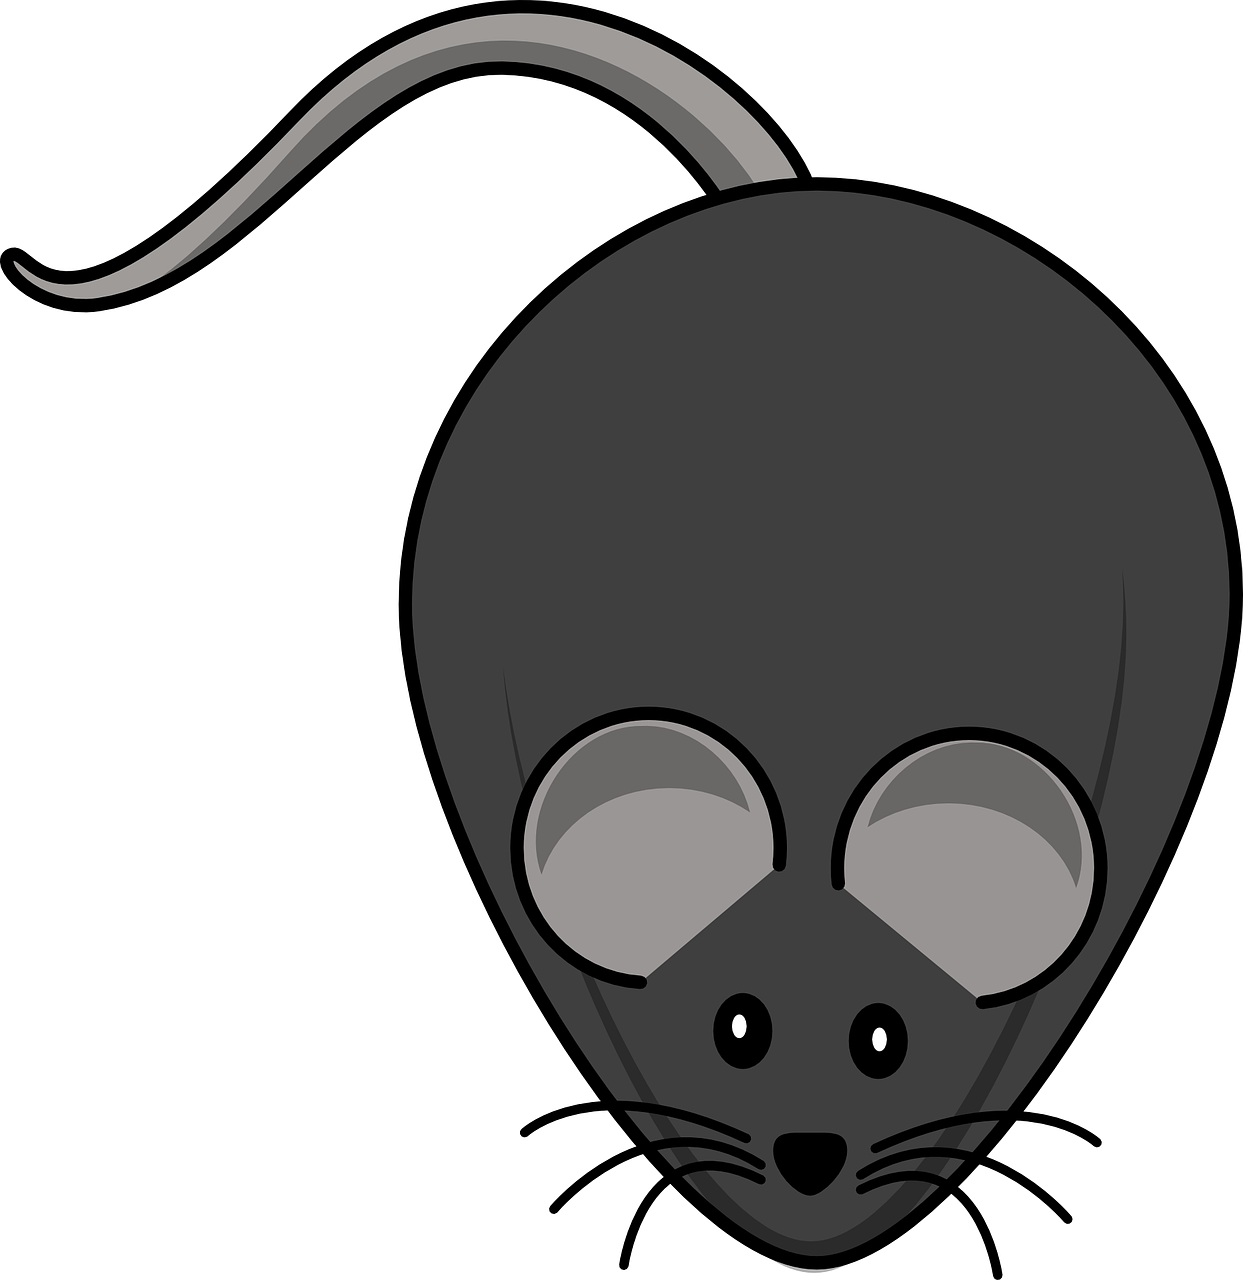 Картинка мышки. Мышь мультяшный. Мышка картинка. Мышка рисунок. Мультяшную мышку.